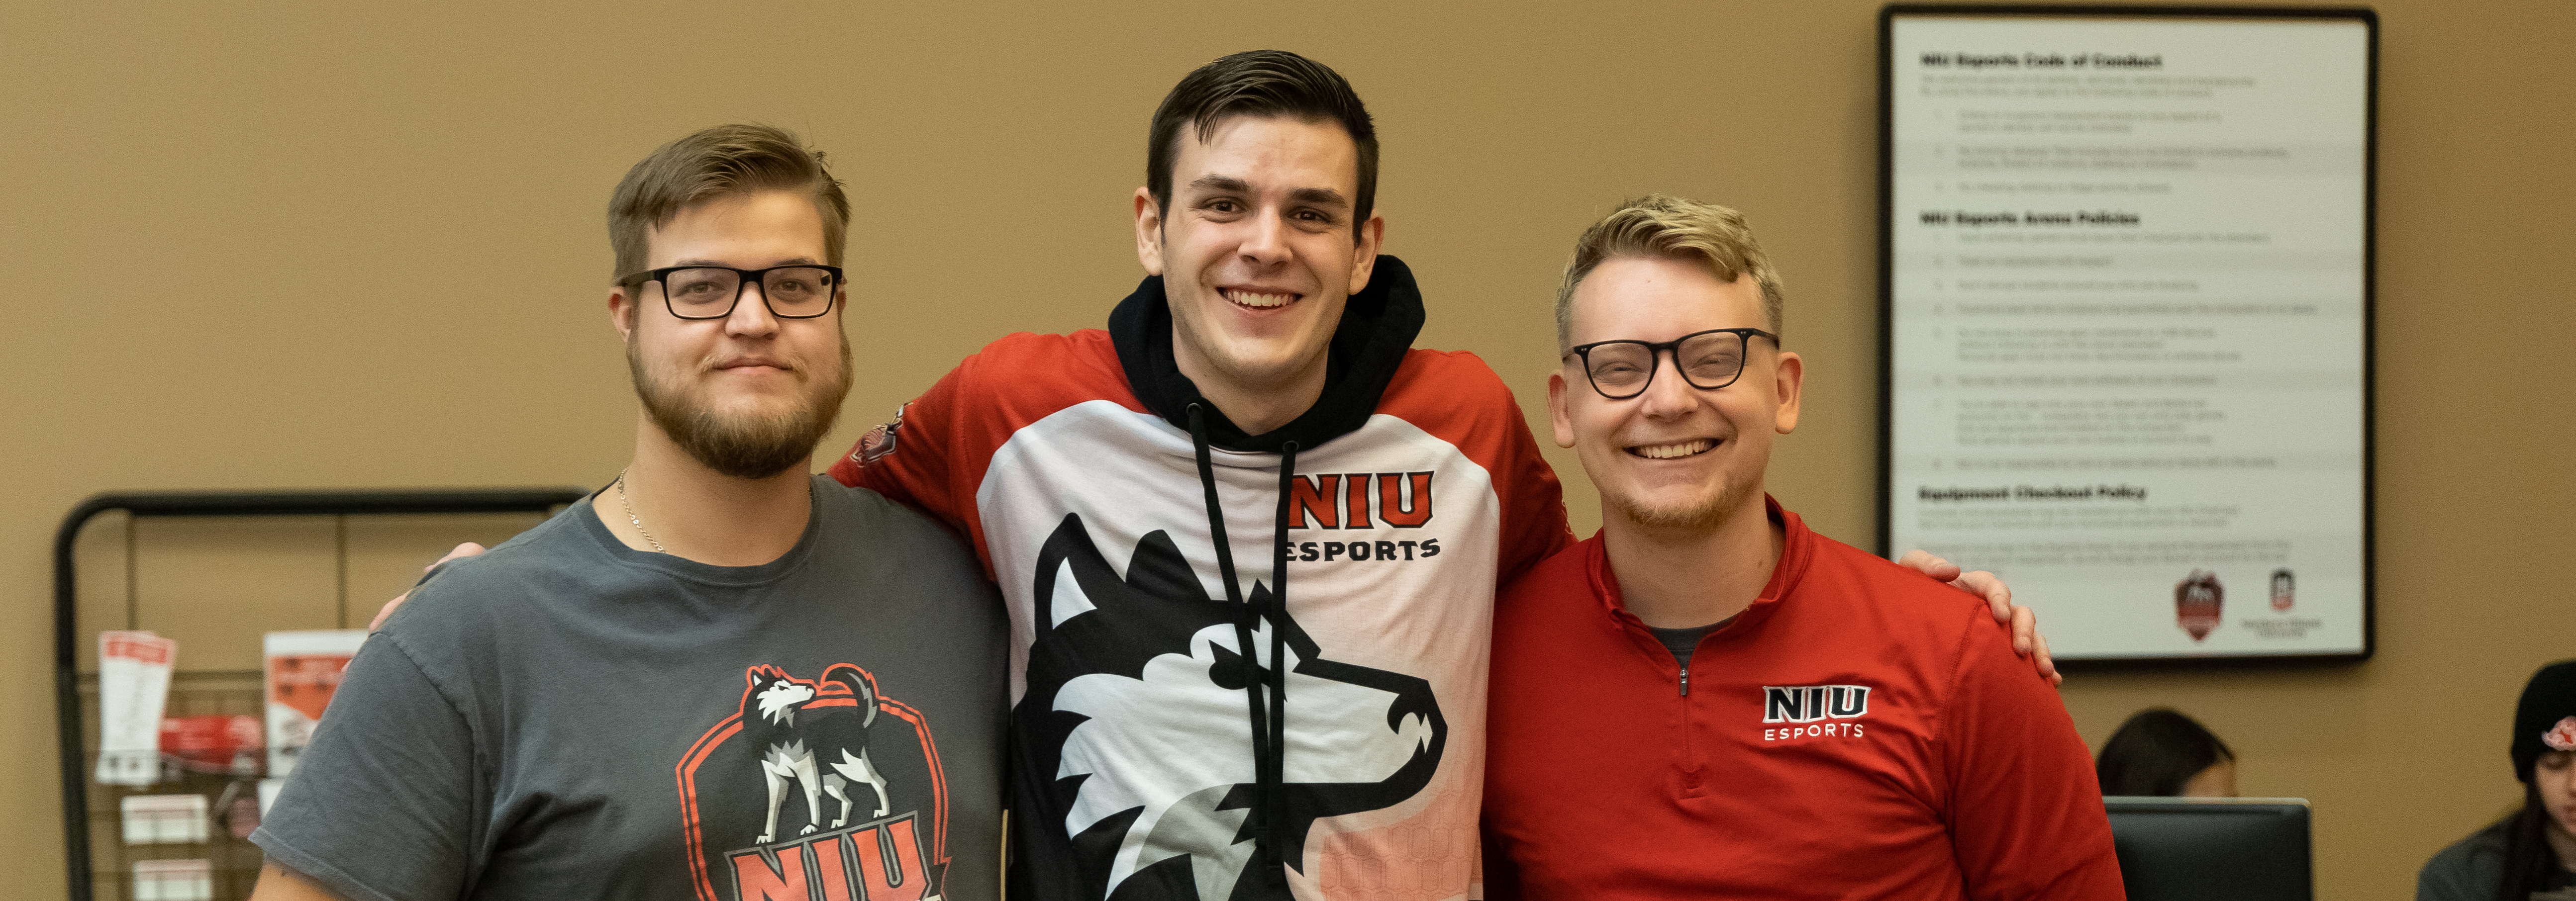 NIU Esports Staff from left to right: Matthew Zebrowski, Alex Kramer and Connor Vagle